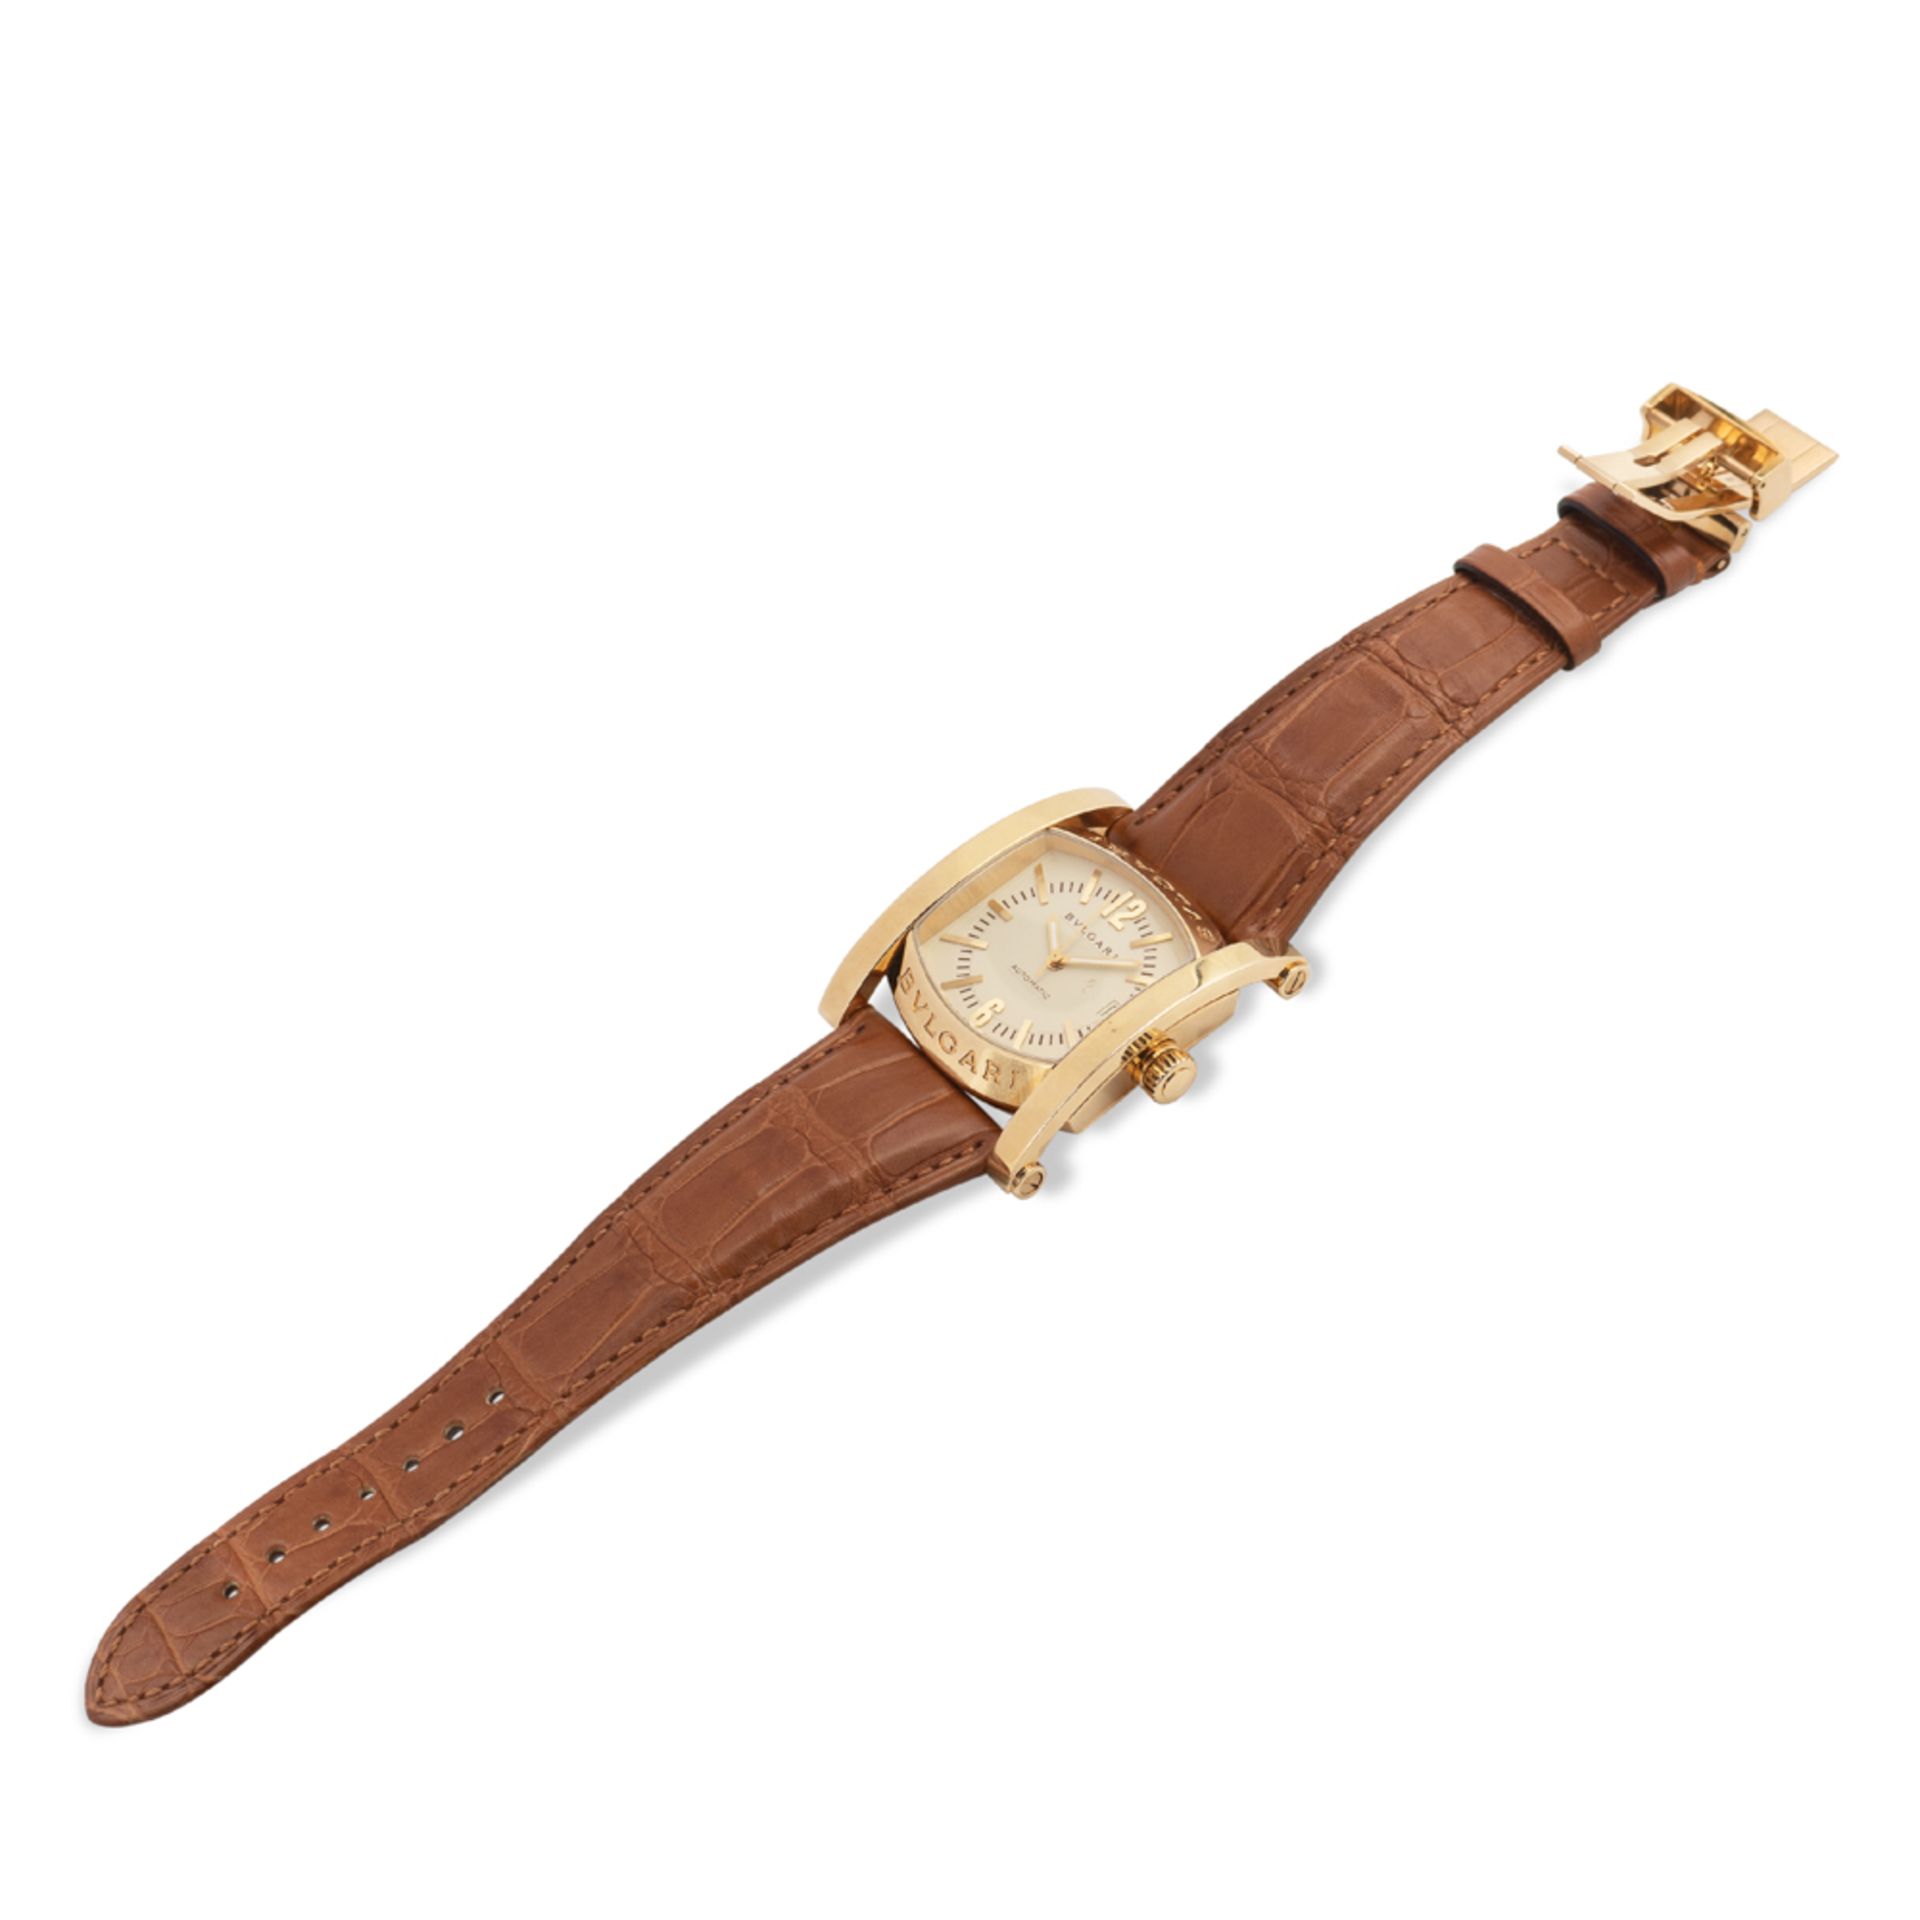 Bulgari Assioma Chronograph, wrist watch limited edition, 2000s - Image 2 of 3